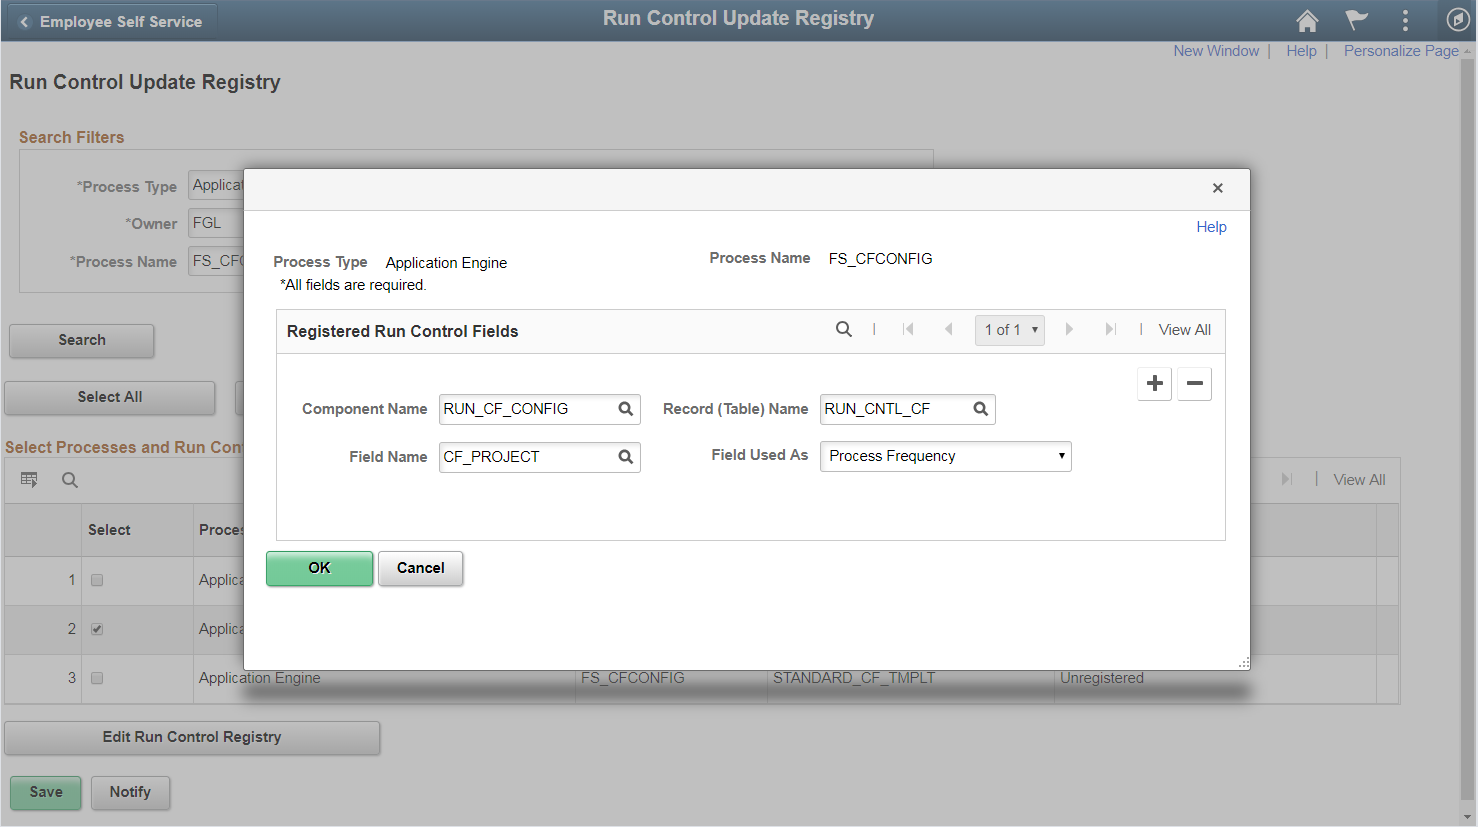 Edit Run Control Registry pagelet